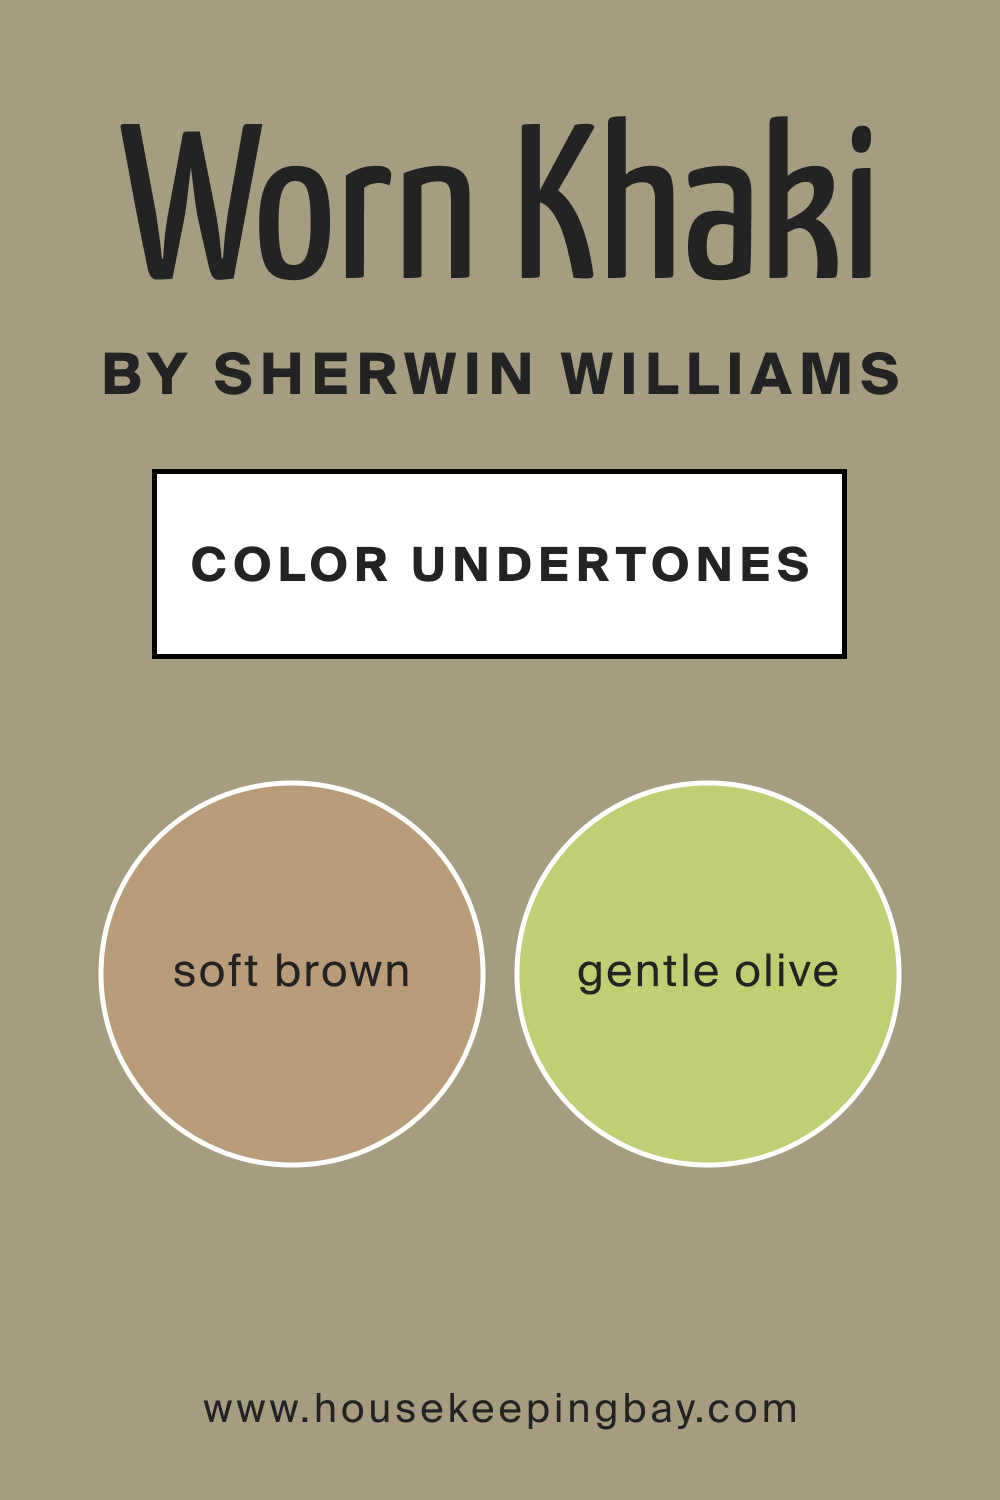 SW 9527 Worn Khaki by Sherwin Williams Color Undertone